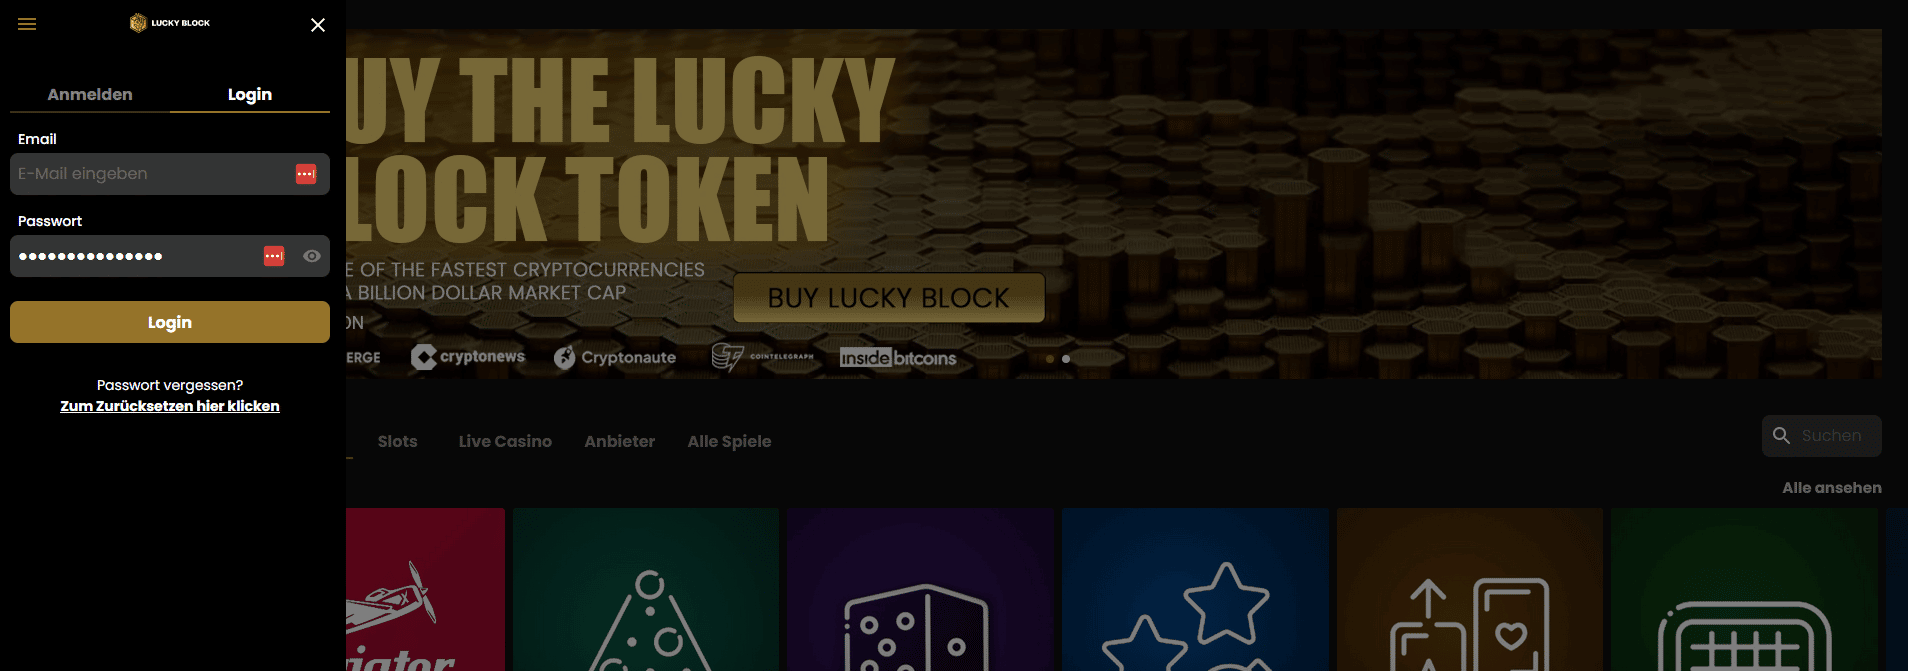 LuckyBlock Casino Einloggen